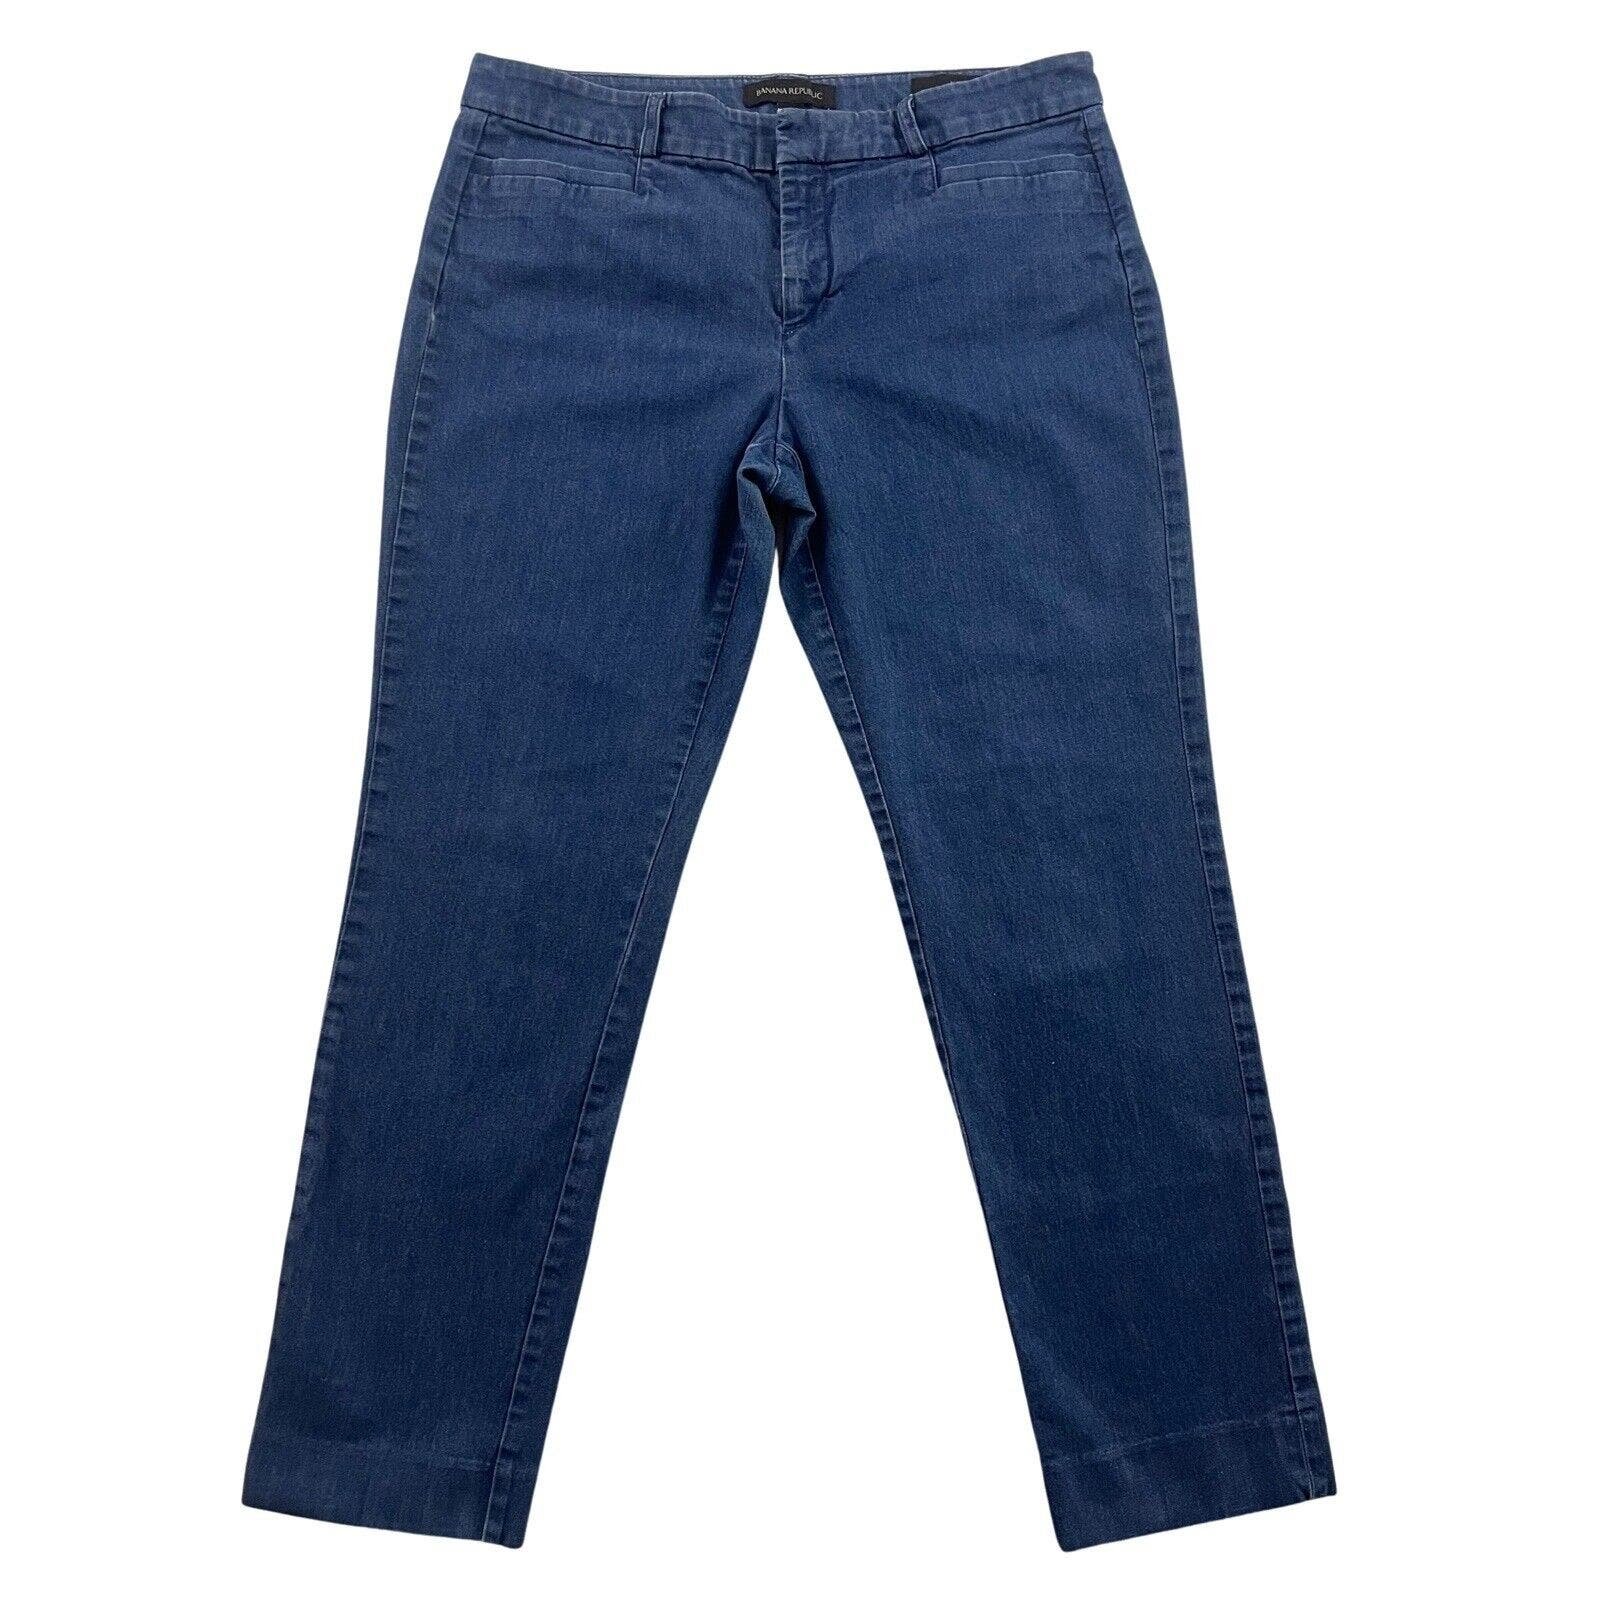 Banana Republic Sloan Jeans Womens Size 6 Blue Cropped Stretch Medium Wash Denim DDmPHAk53